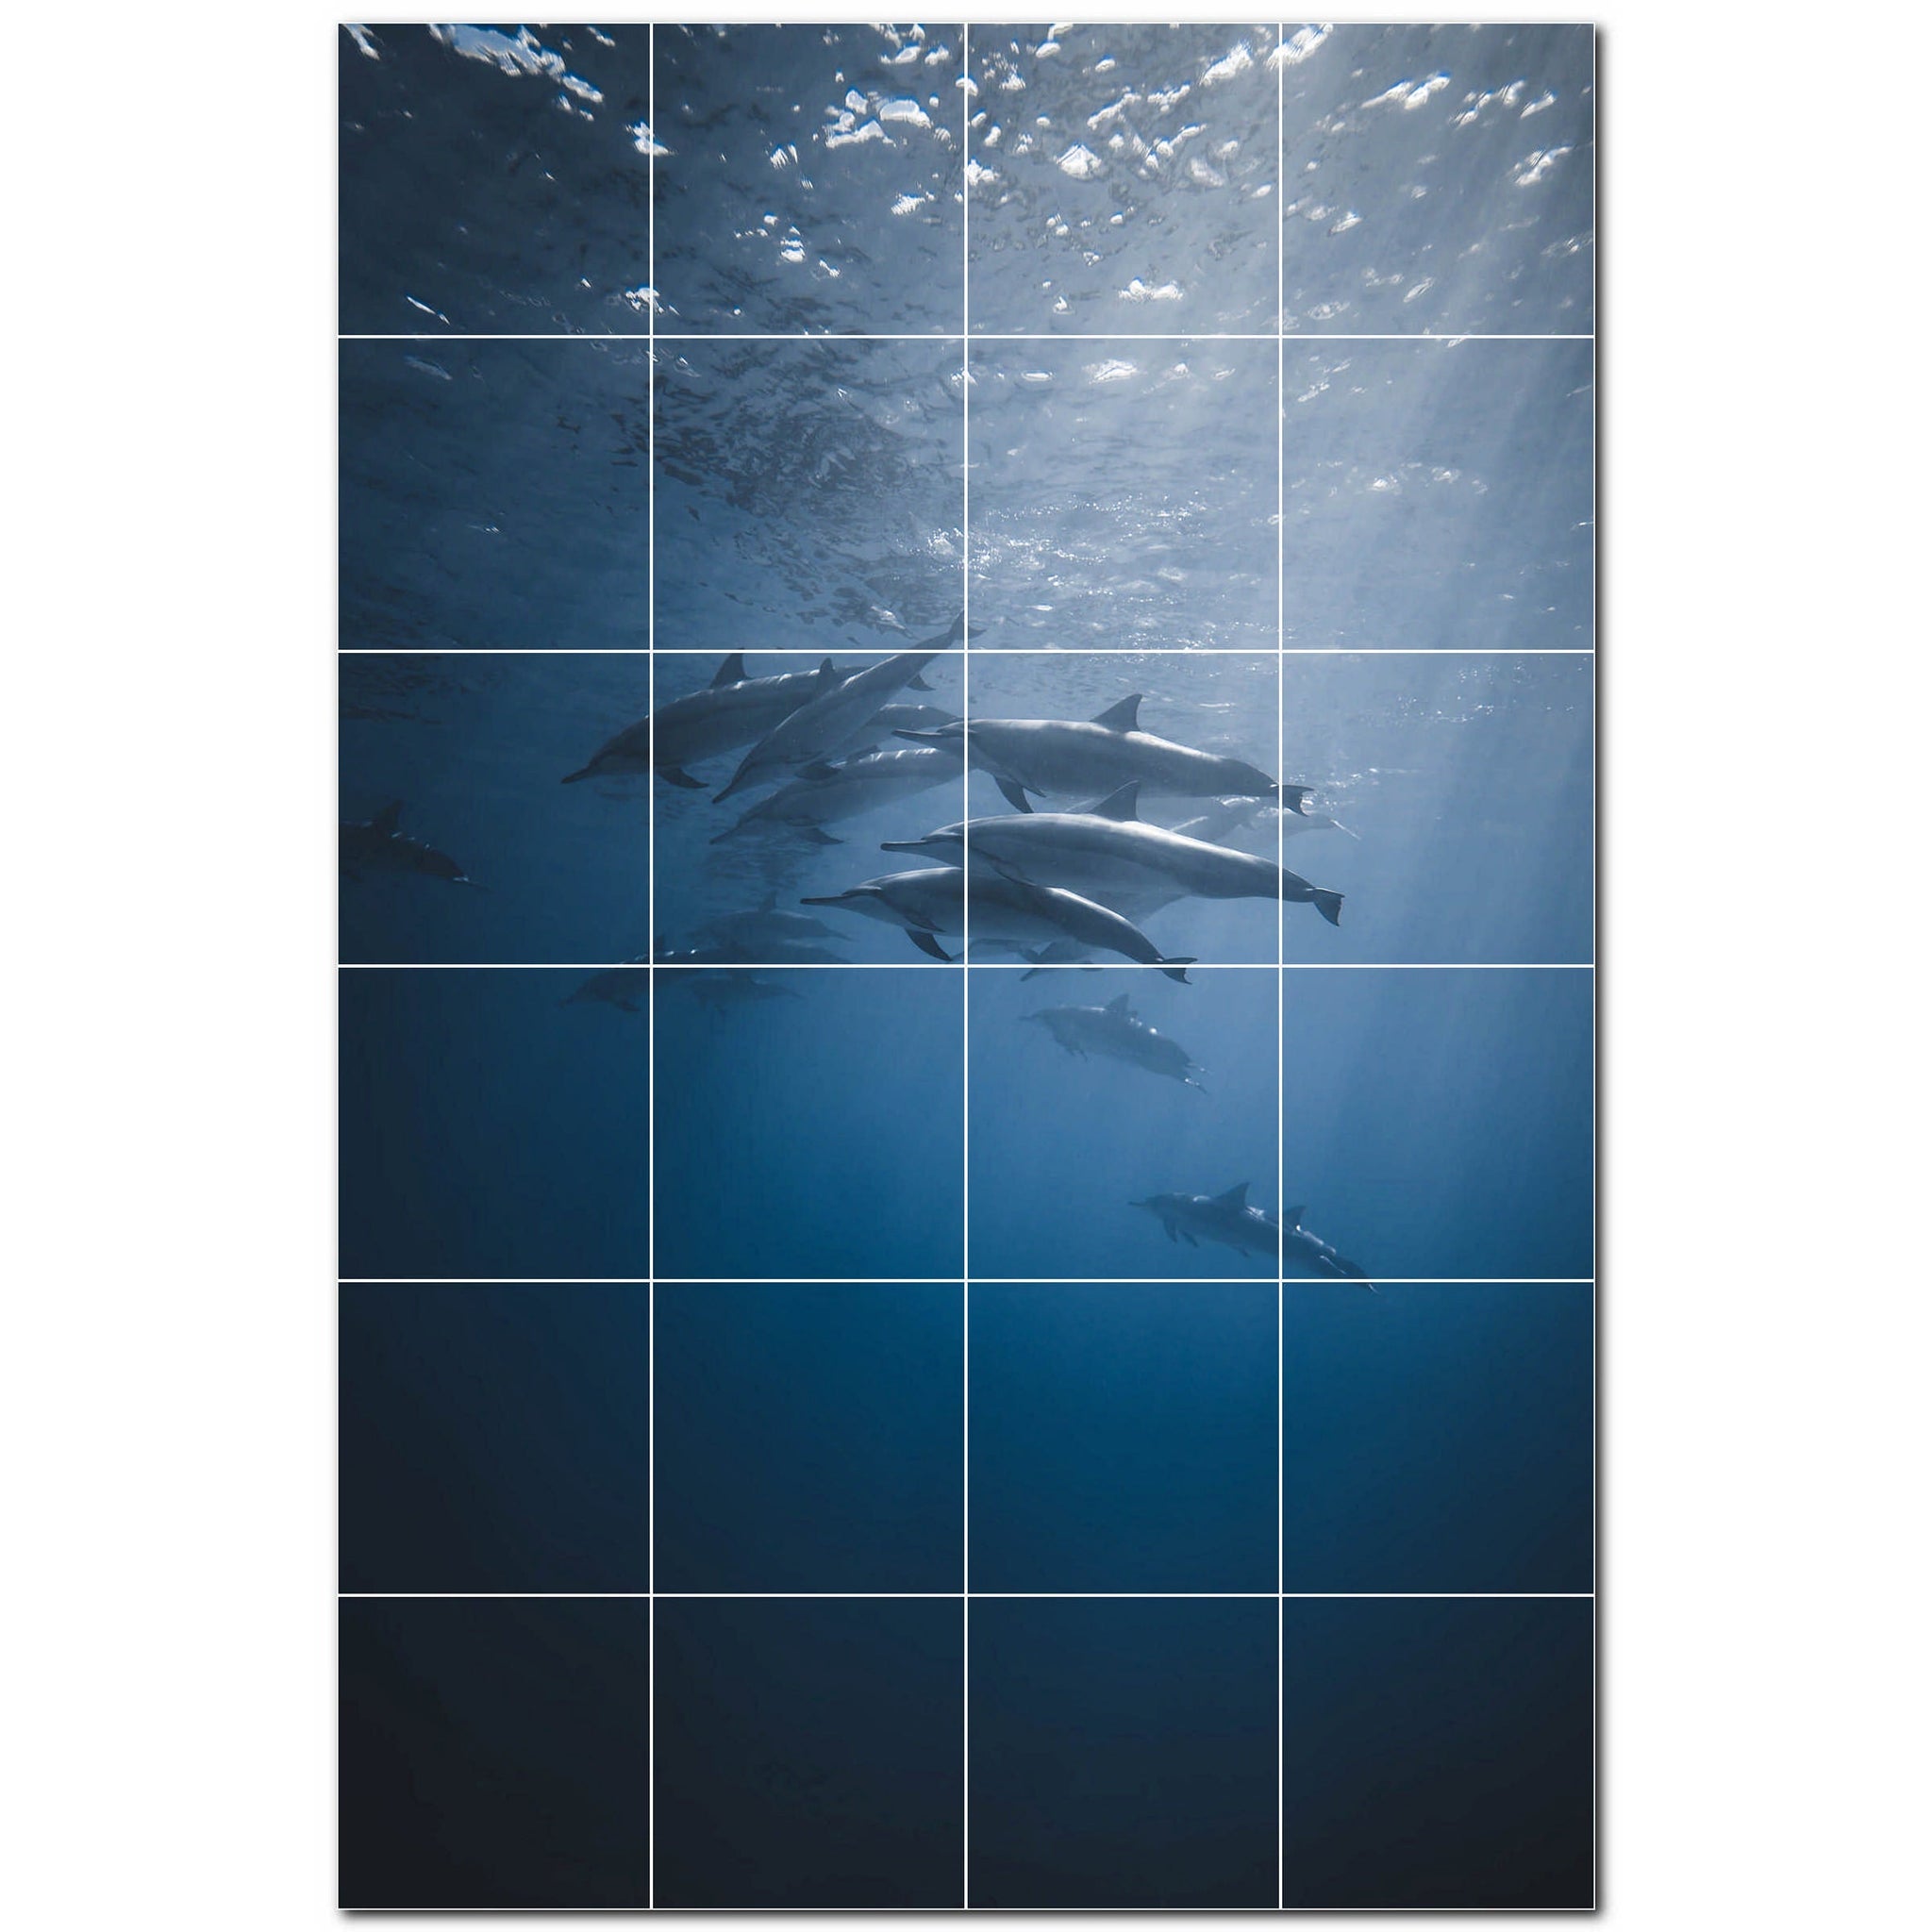 dolphin ceramic tile wall mural kitchen backsplash bathroom shower p500513